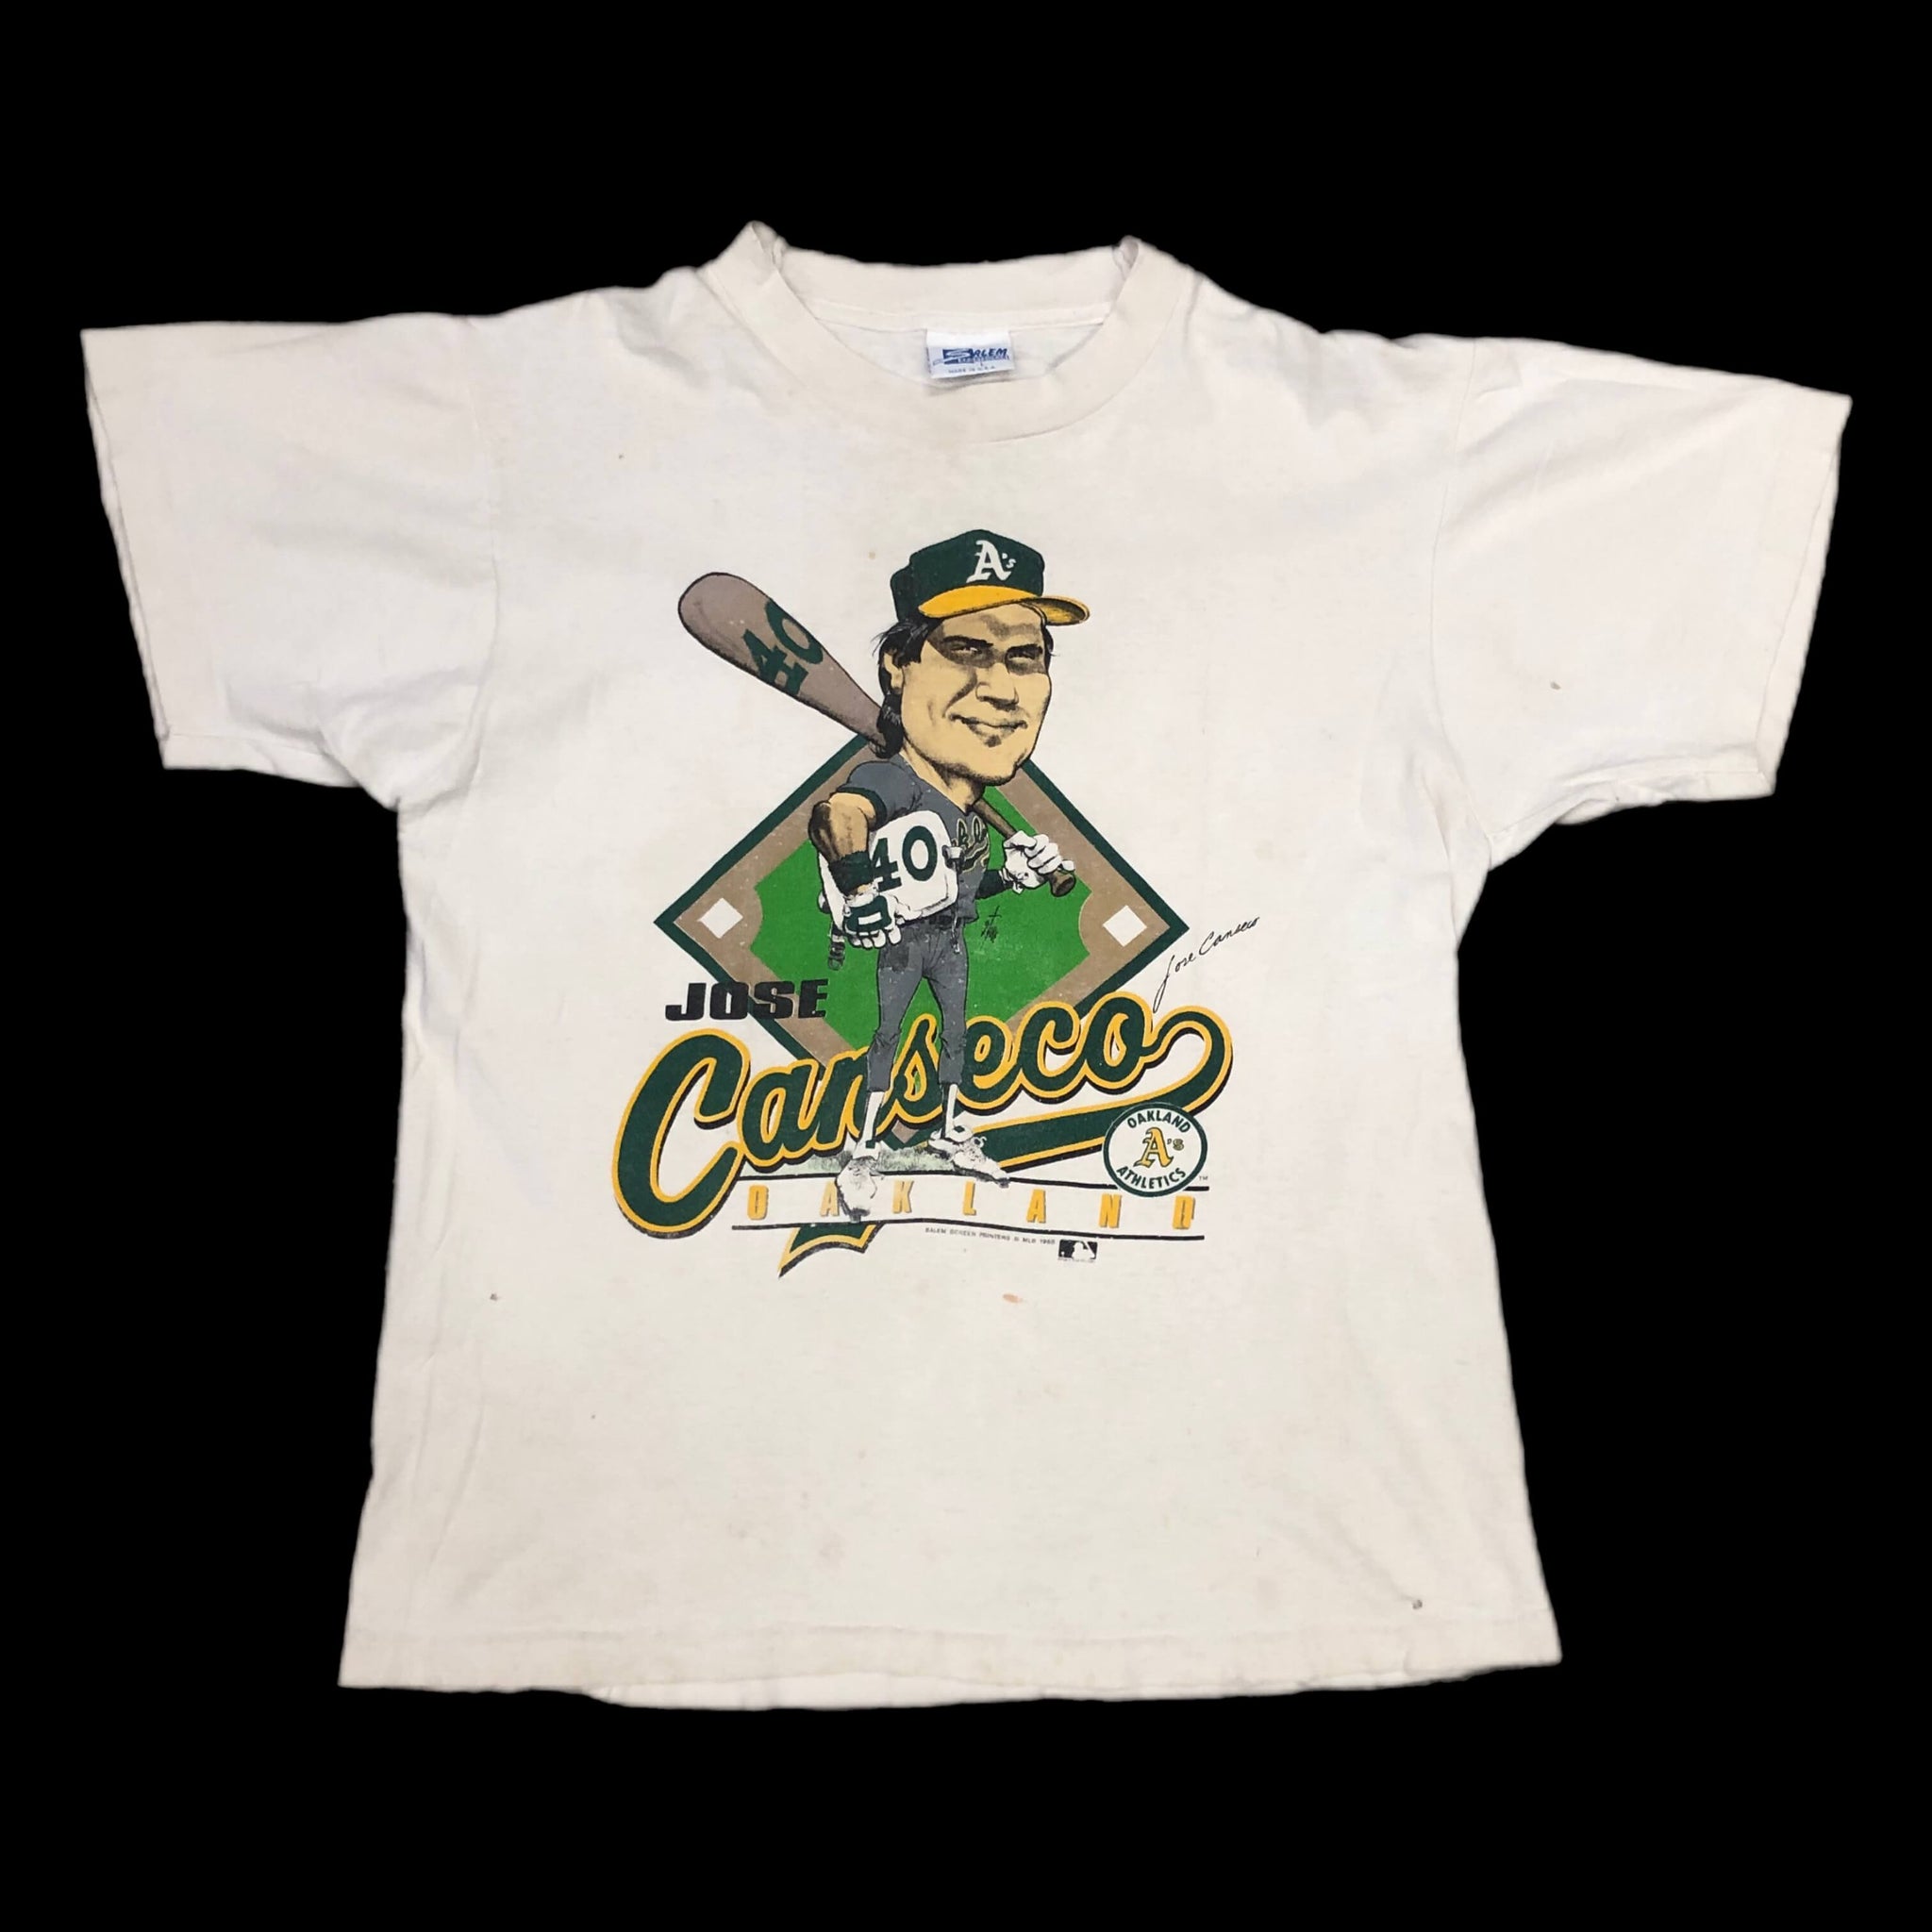 Vintage 1988 MLB Oakland Athletics Jose Canseco 40 Home Runs 40 Stolen Bases Salem Sportswear T-Shirt (L)